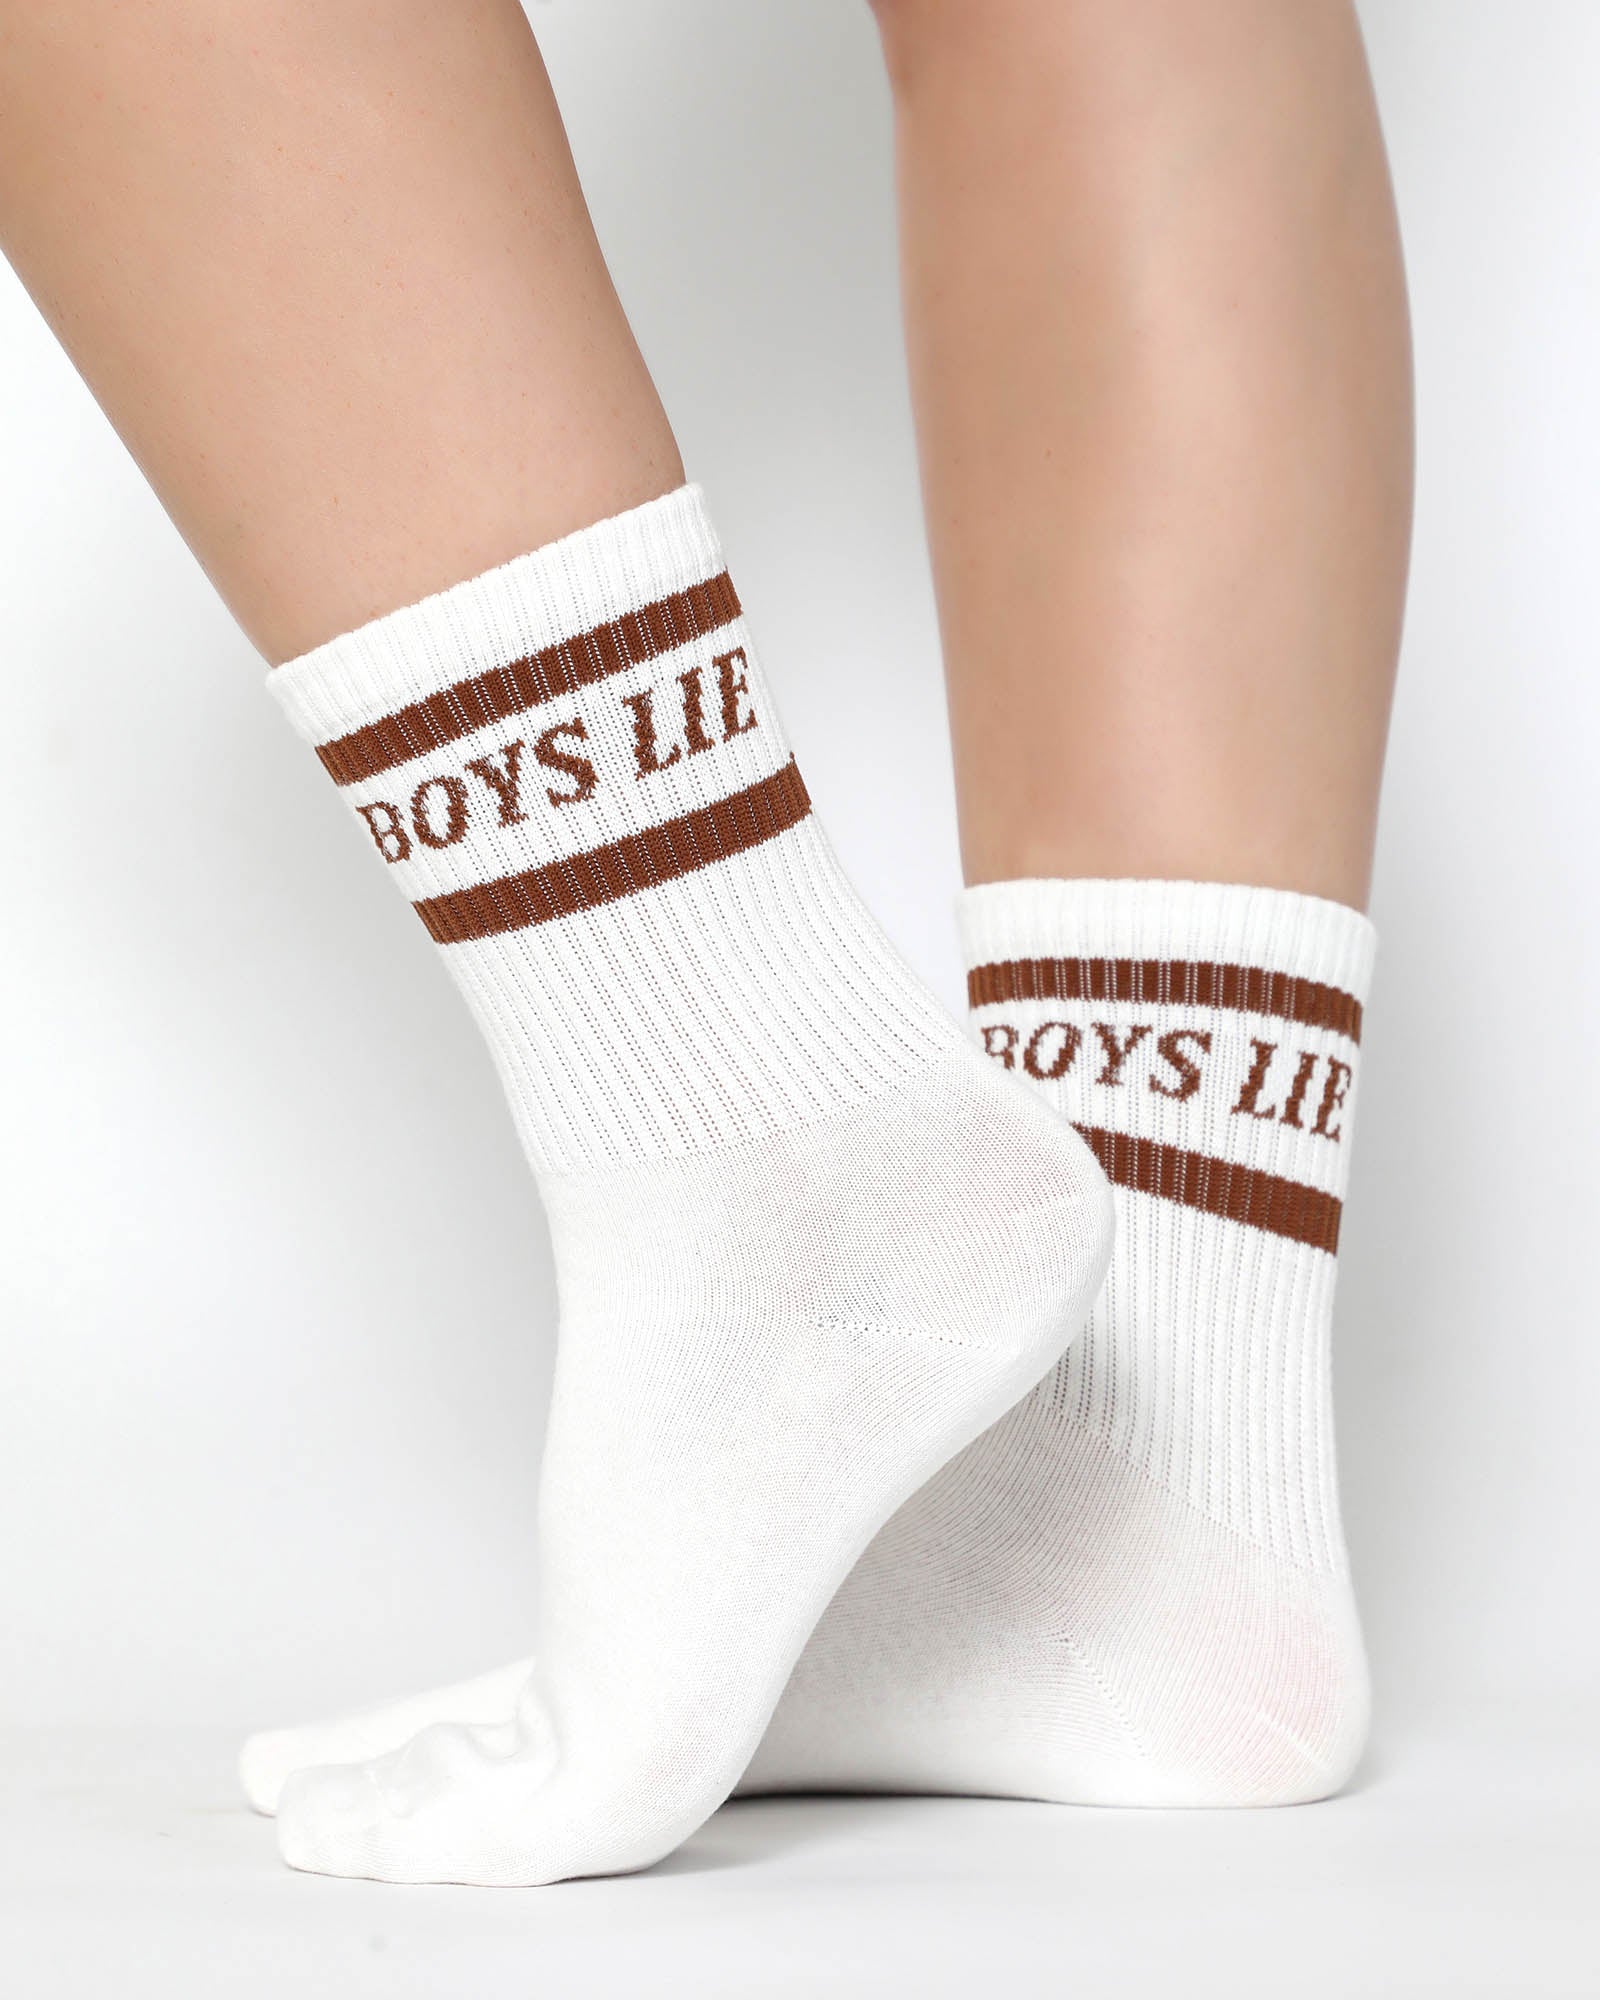 Boys Lie Neutral Socks - Cinnamon